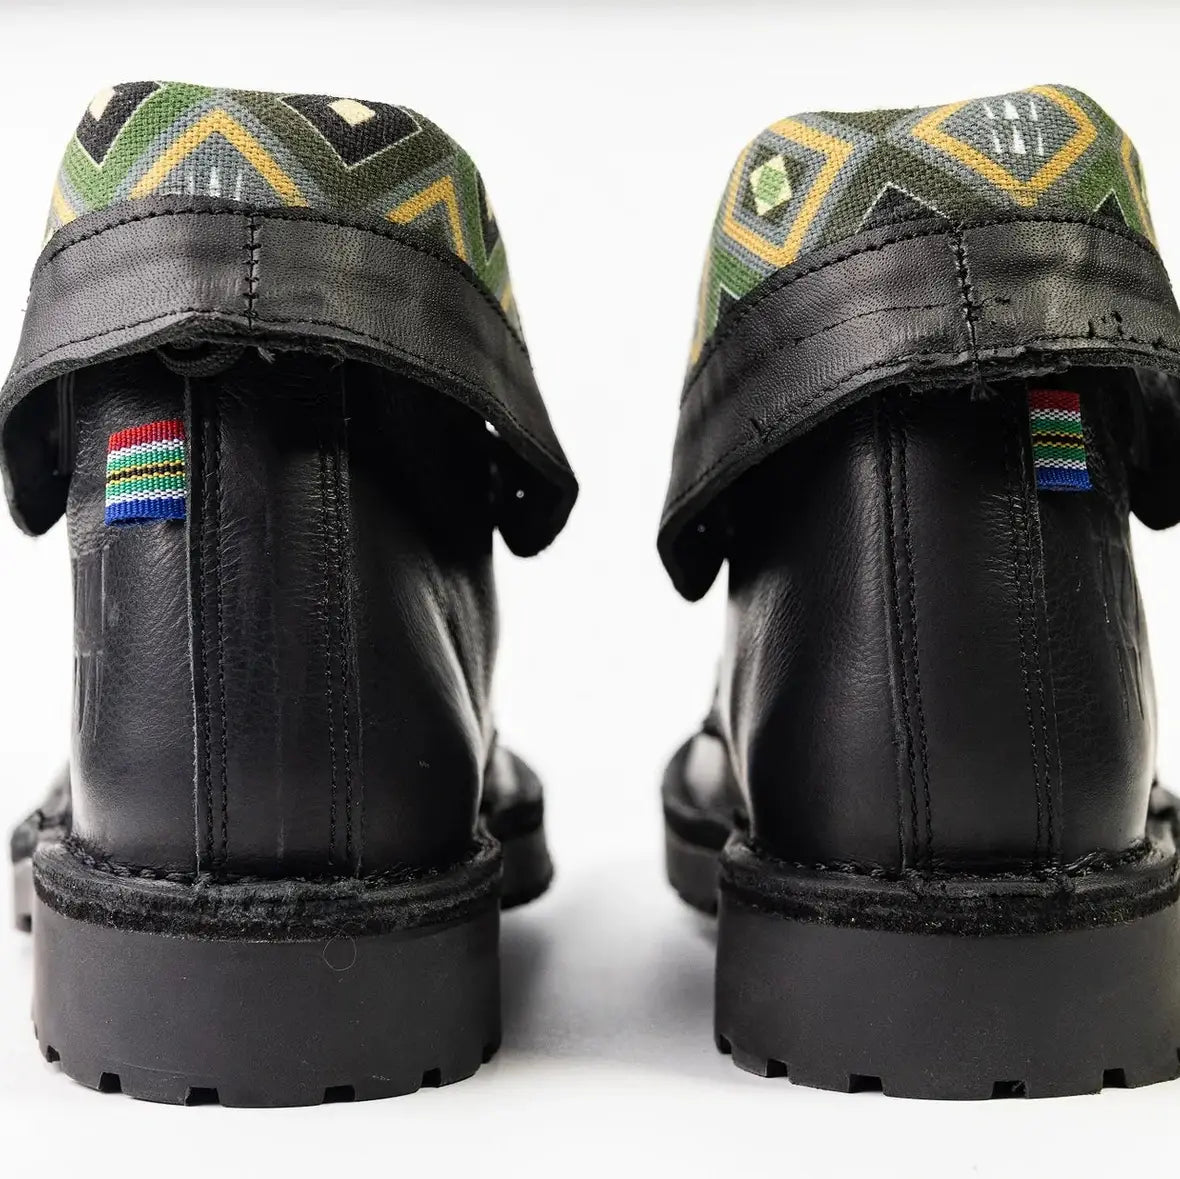 Ranger Boots - Black Leather